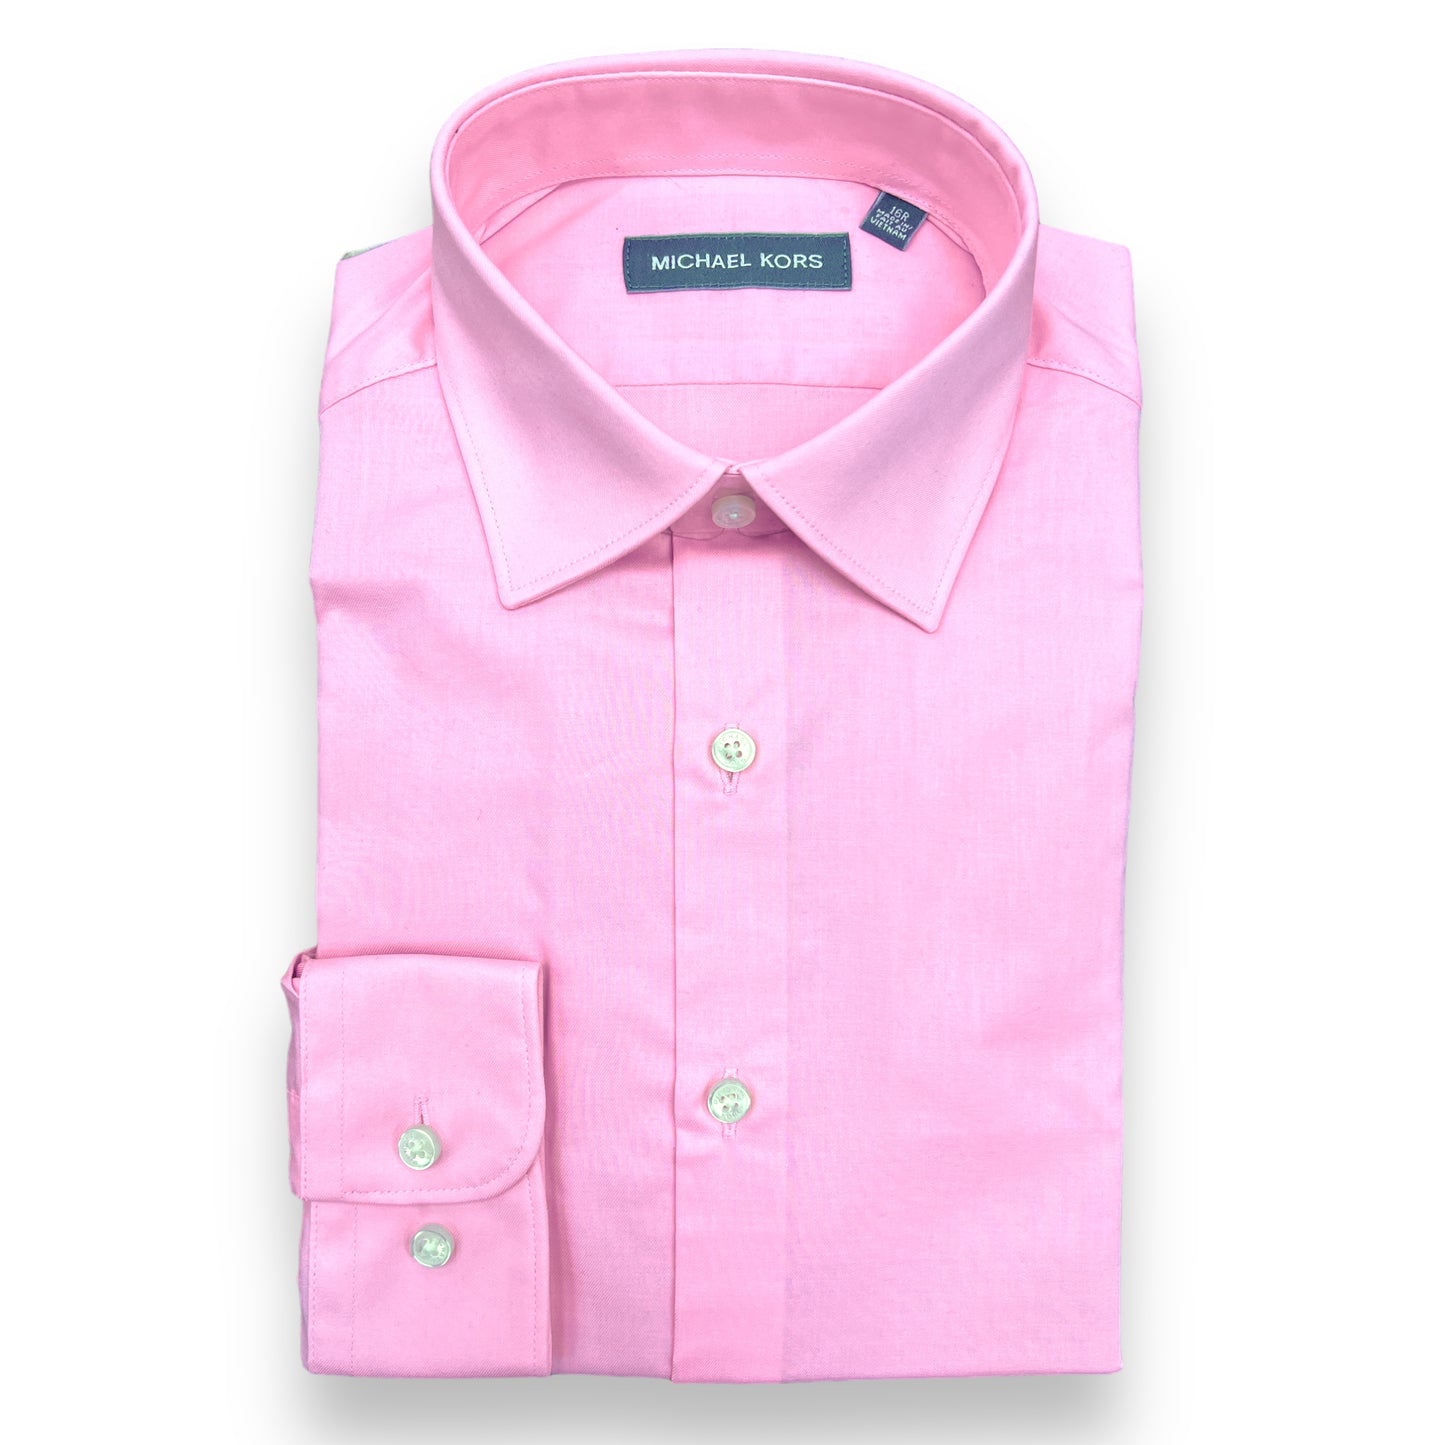 Michael Kors Boys Pink Dress Shirt_ LY0003